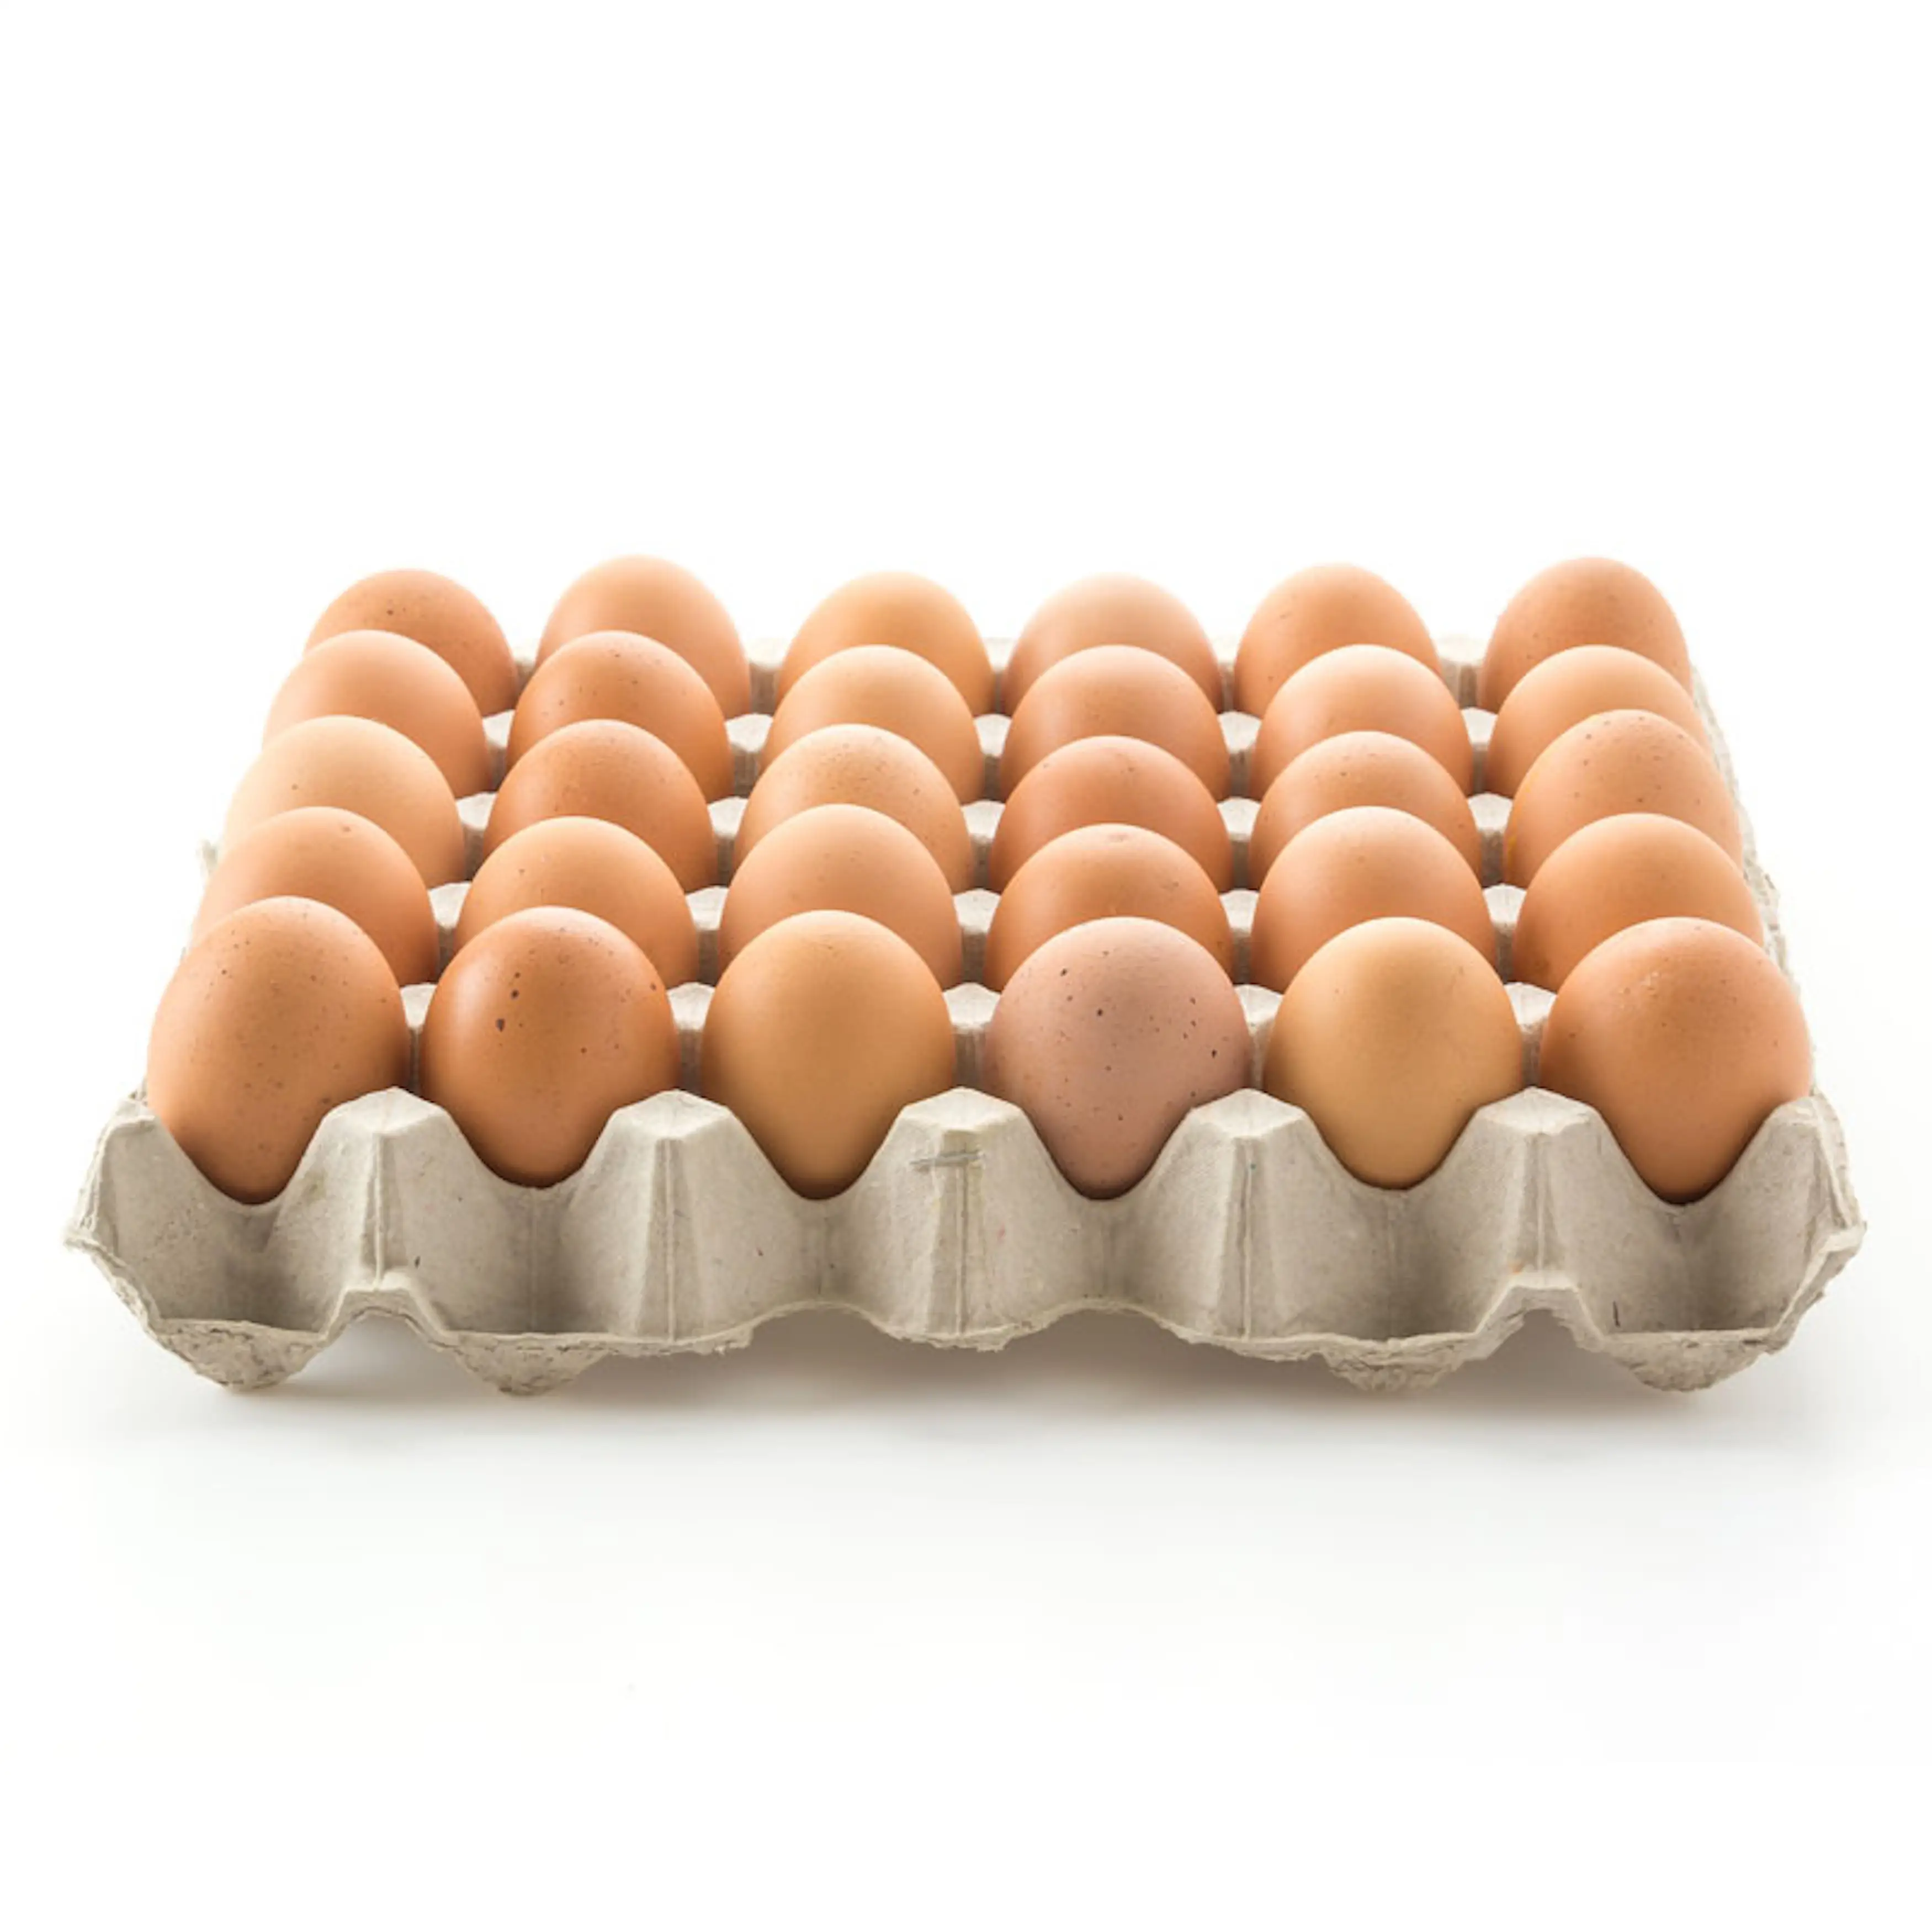 High Quality Fresh Chicken Eggs